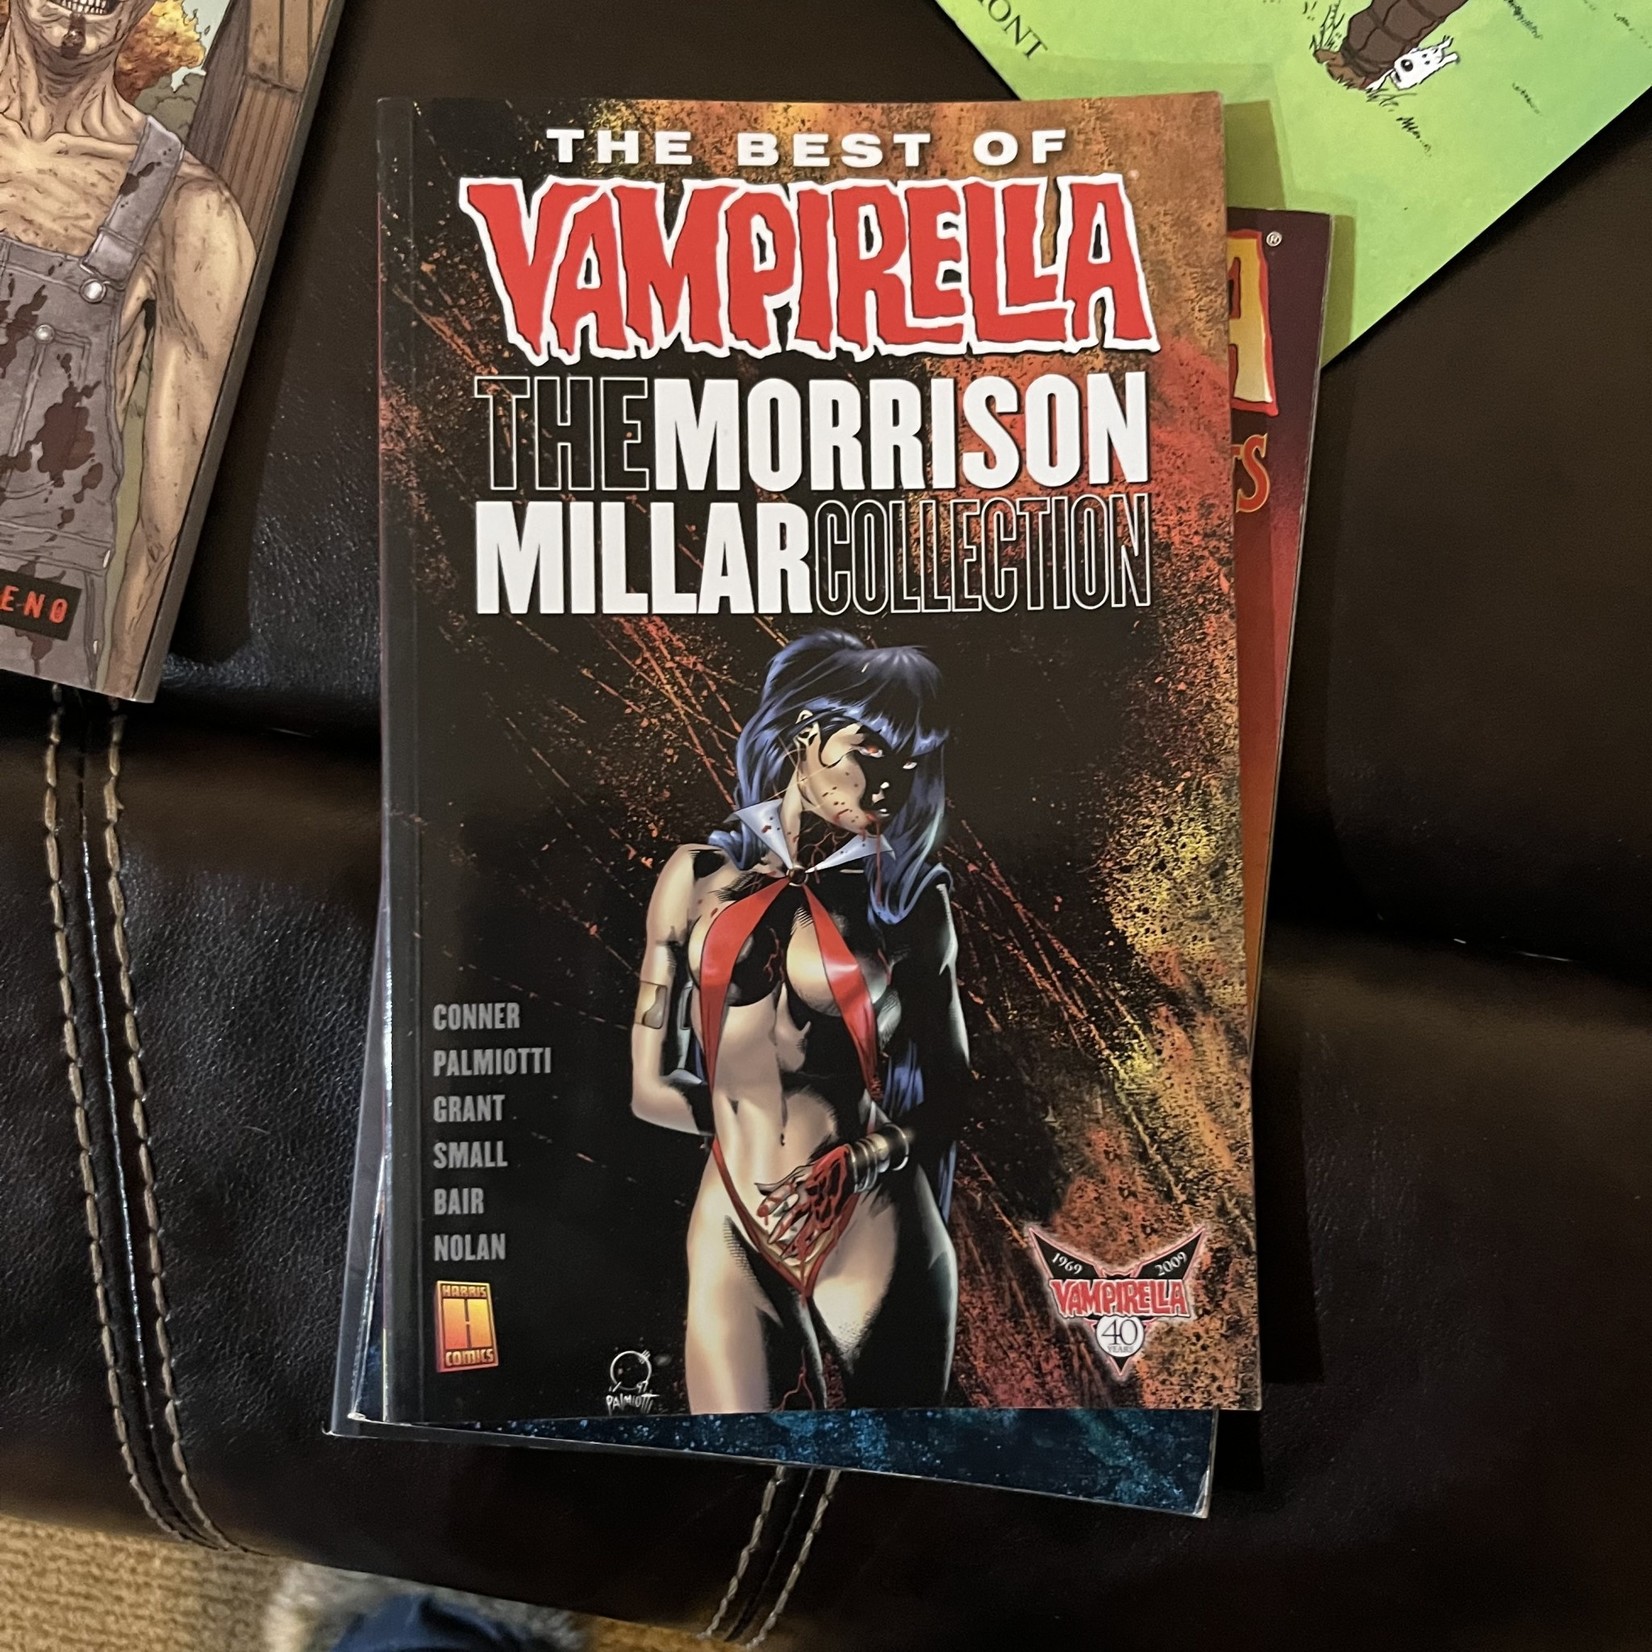 The Best of Vampirella - The Morrison Millar Collection